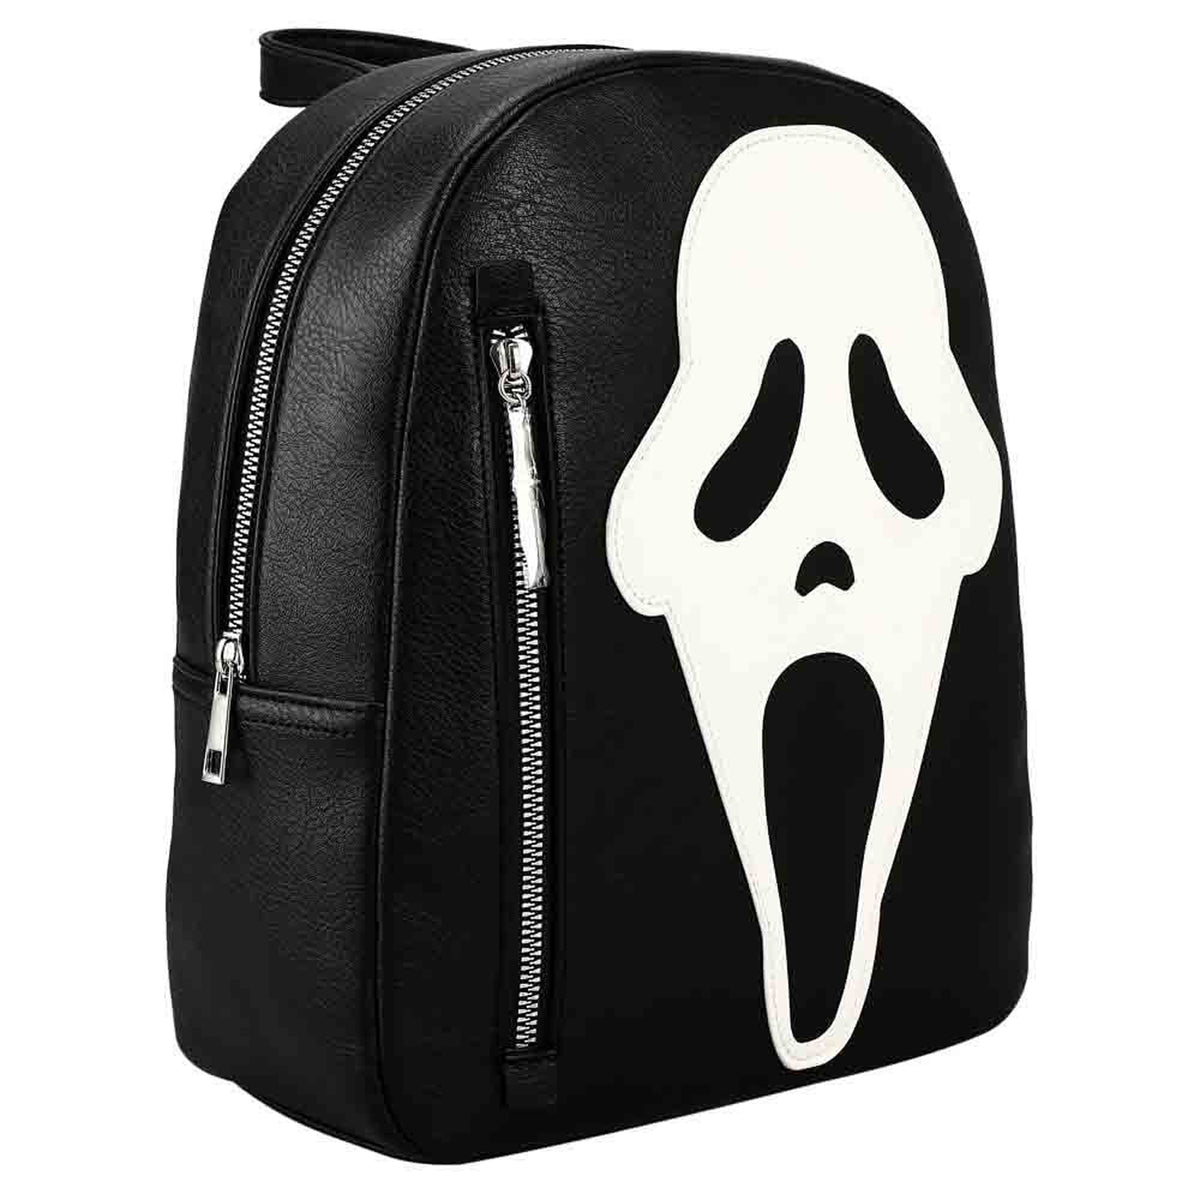 Scream Ghost Face Glow in the Dark Mini Backpack